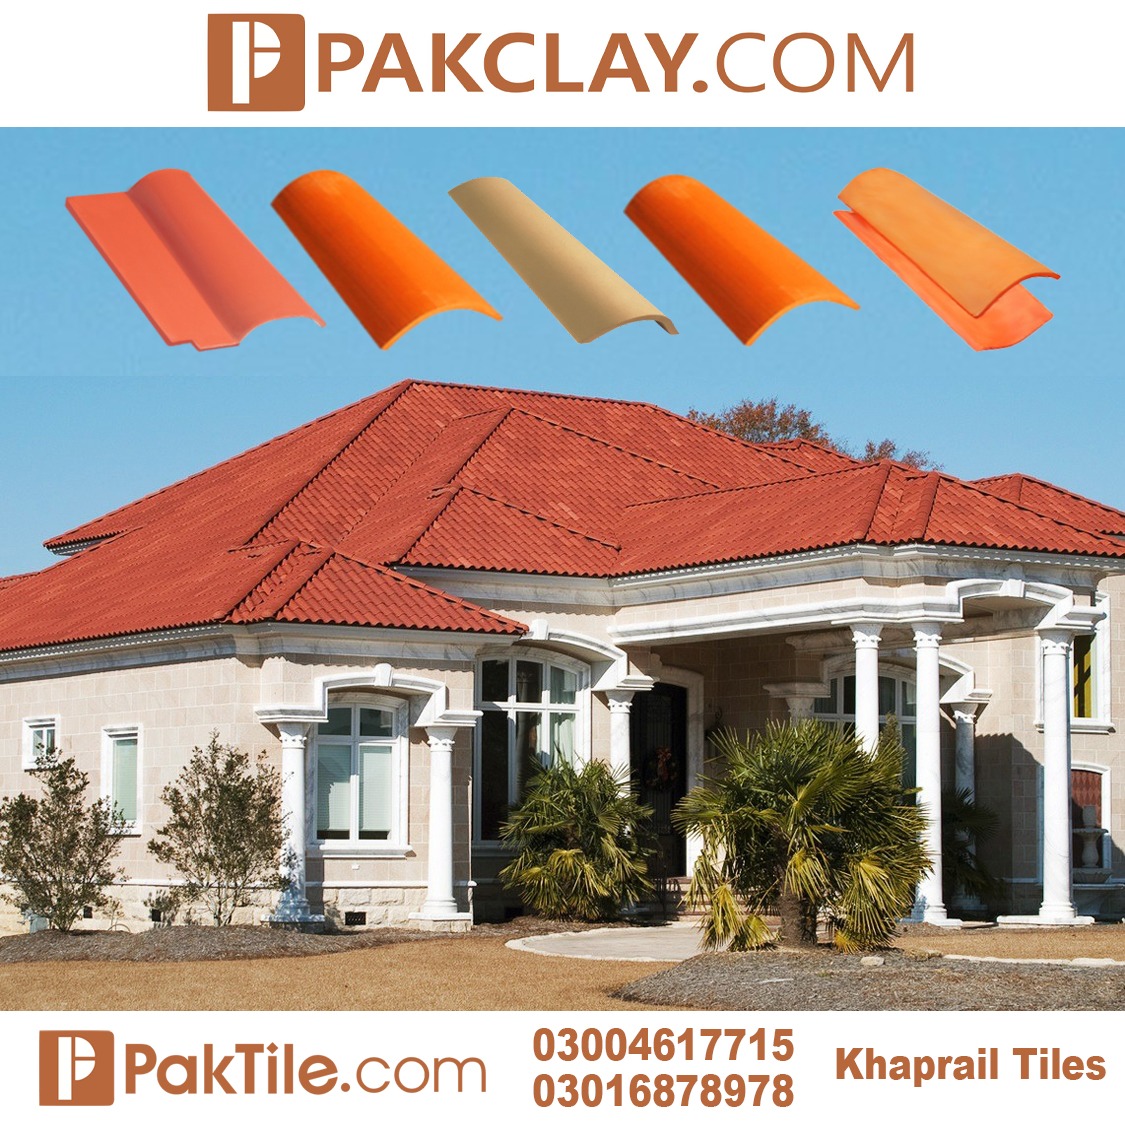 5 Pak Clay Roof Tiles in Pakistan